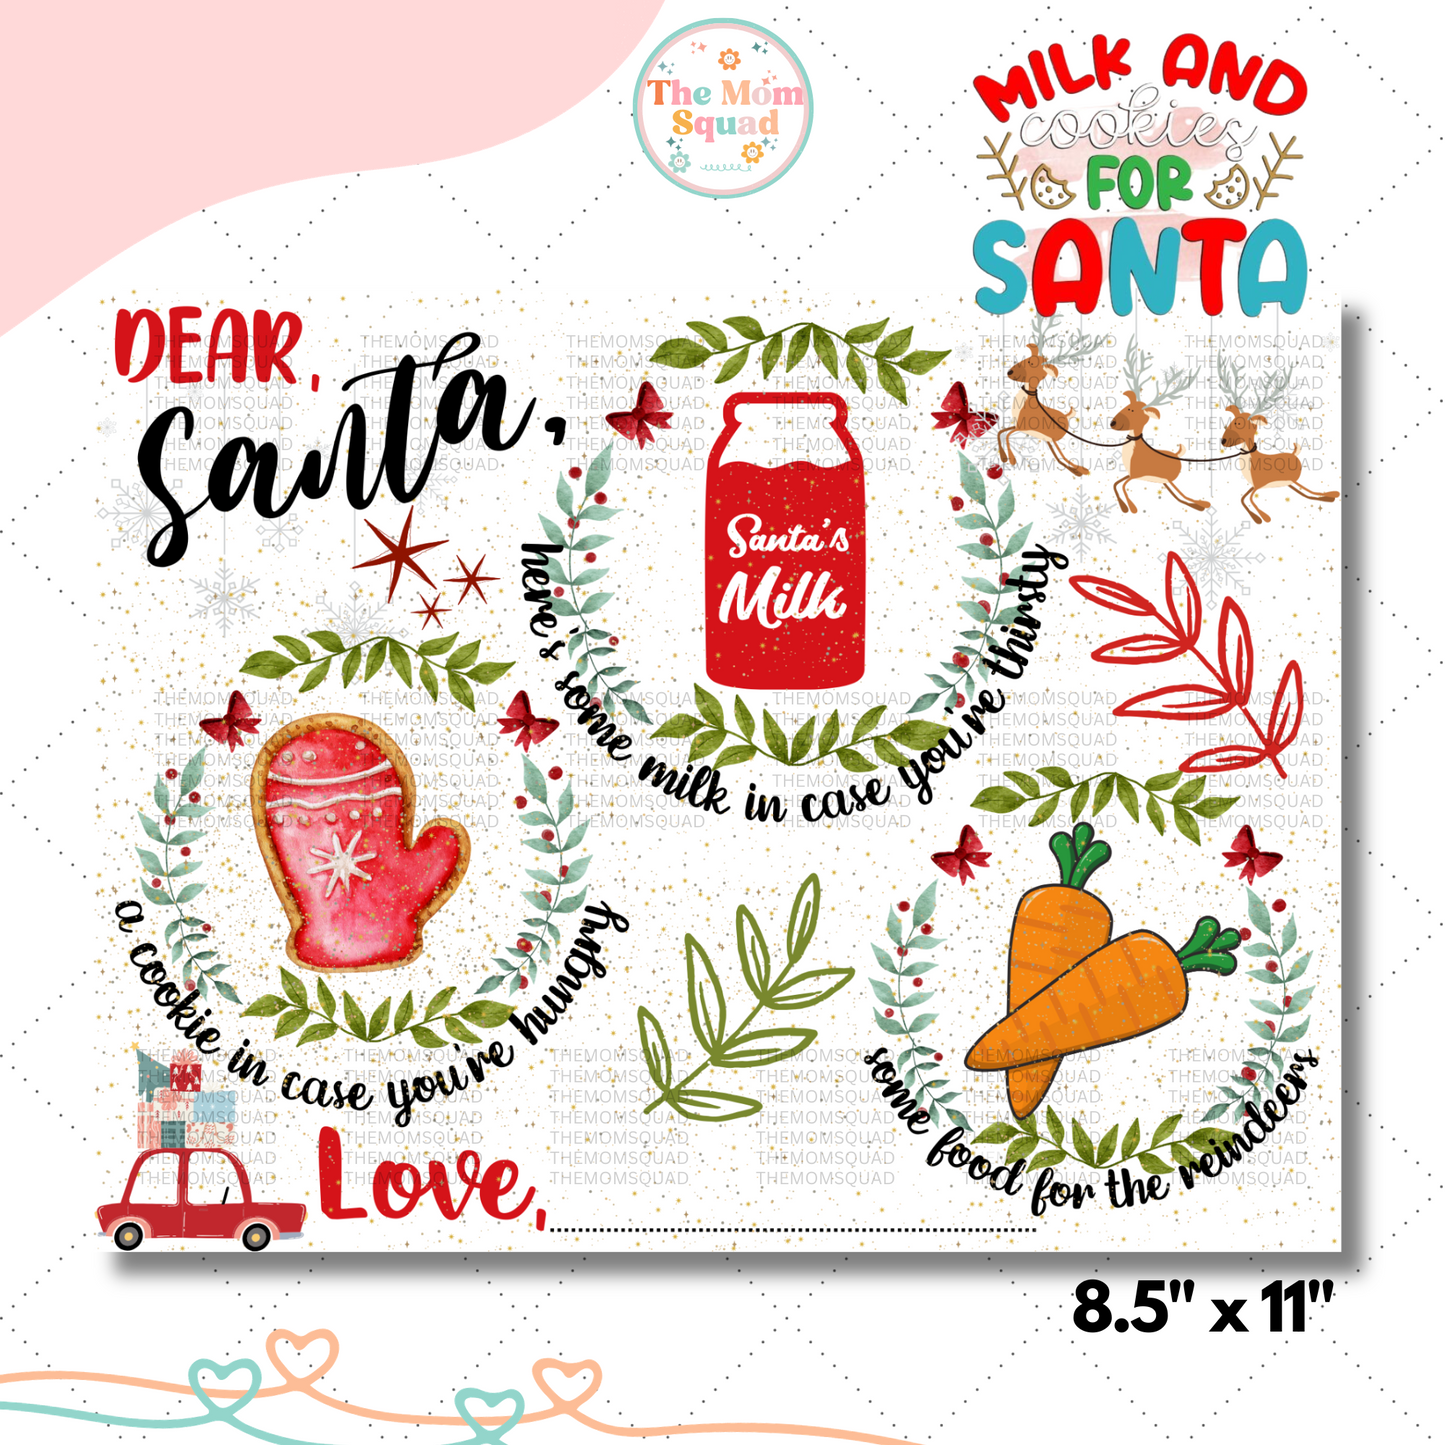 Santa's Workshop Delight: Christmas Dear Santa Cookie Placemat Printable – Festive & Fun Holiday Decor for a Sweet Season!